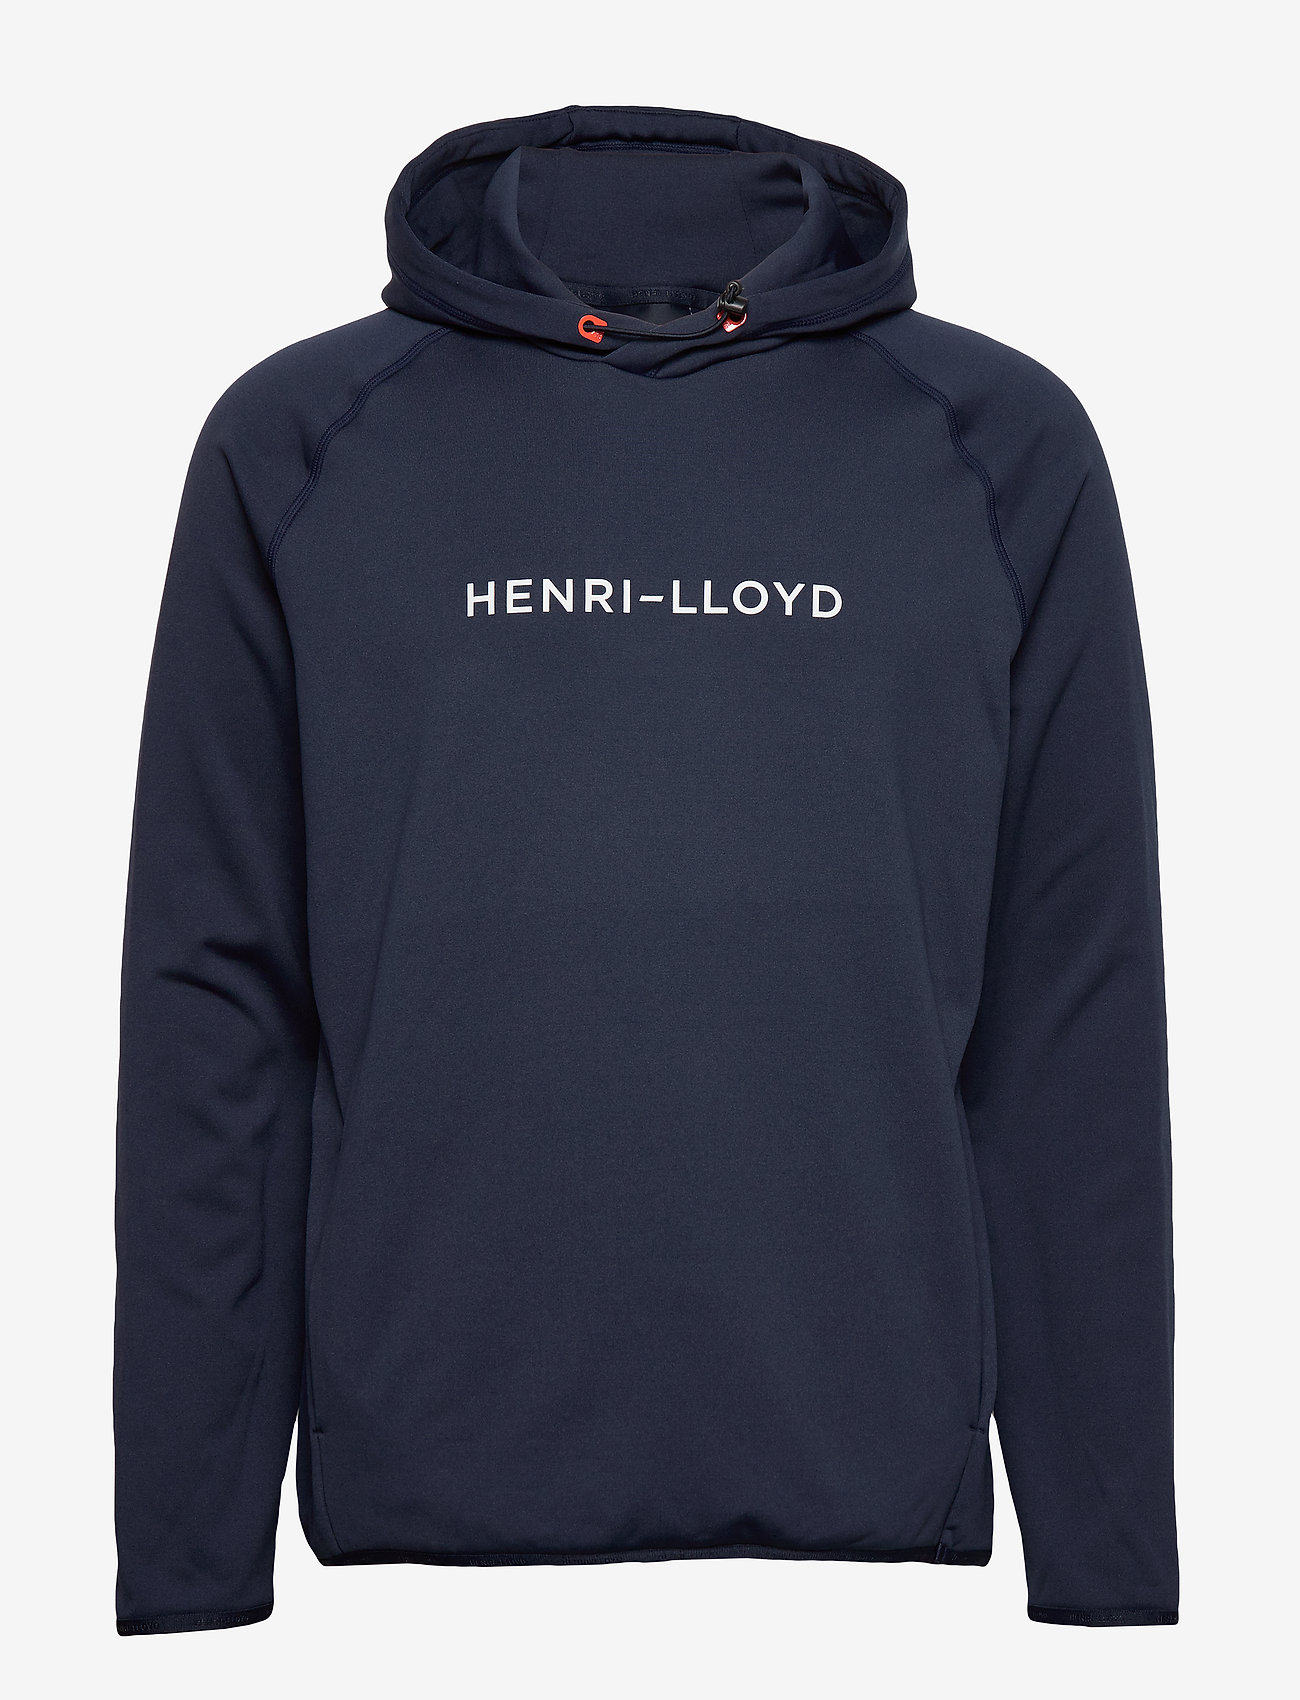 henri lloyd hoodie